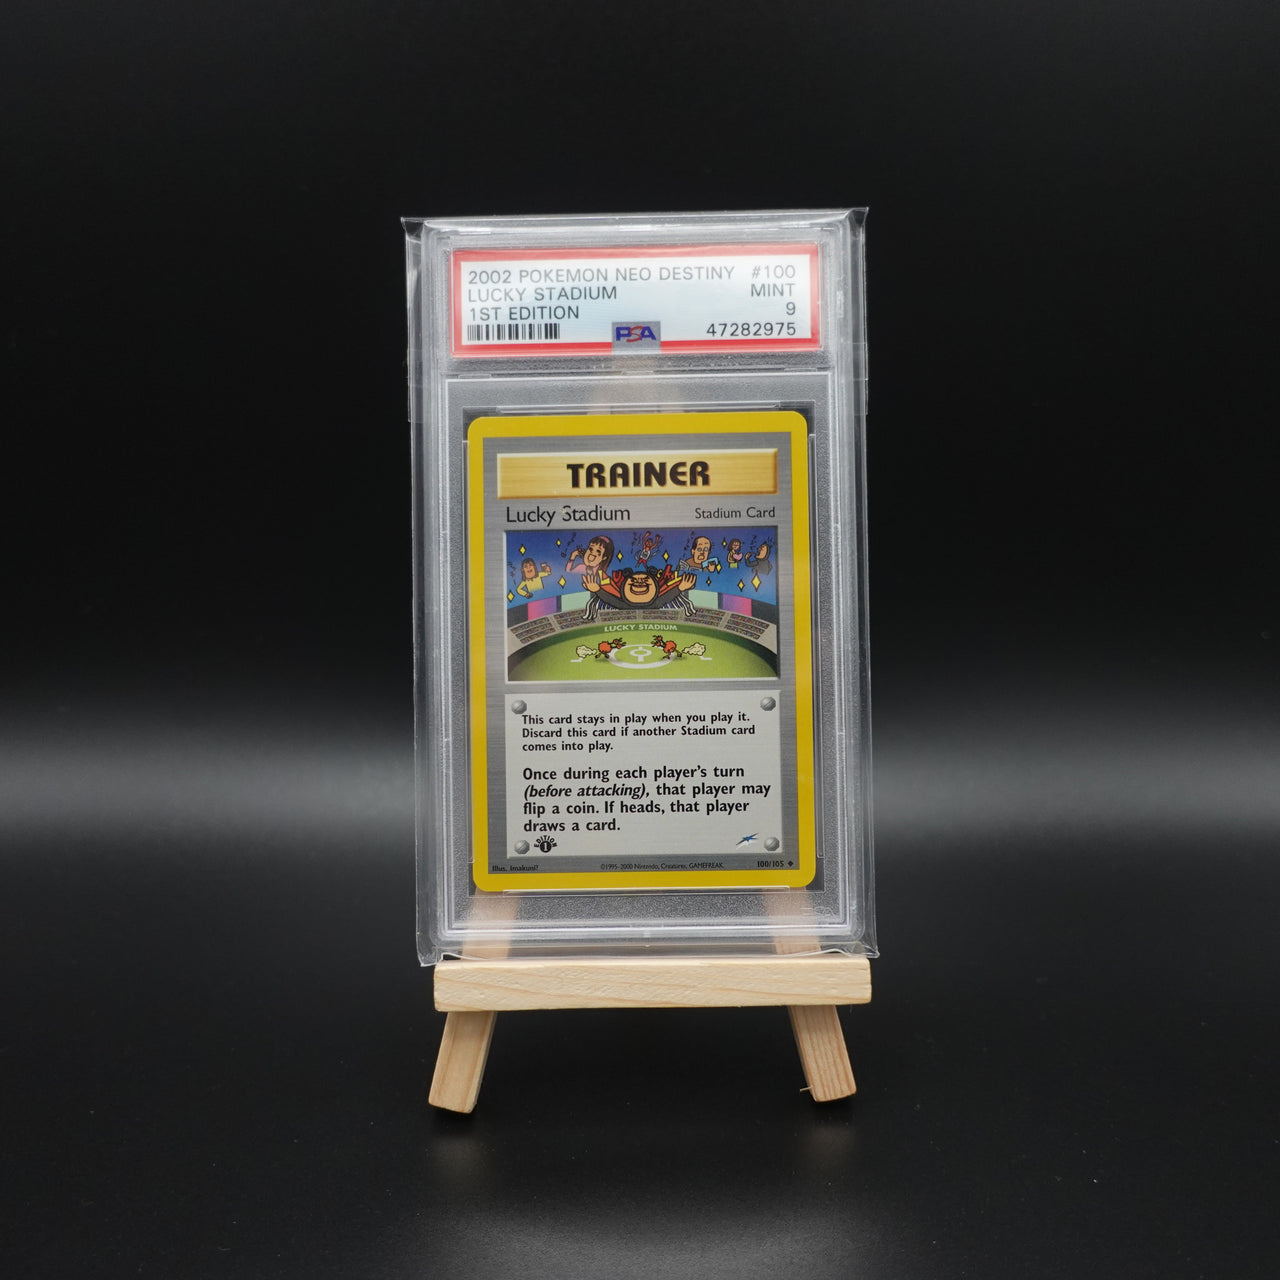 Pokémon 2002 Trainer Lucky Stadium Pokemon Neo Destiny 1st Edition #100 PSA 9 - 47282975